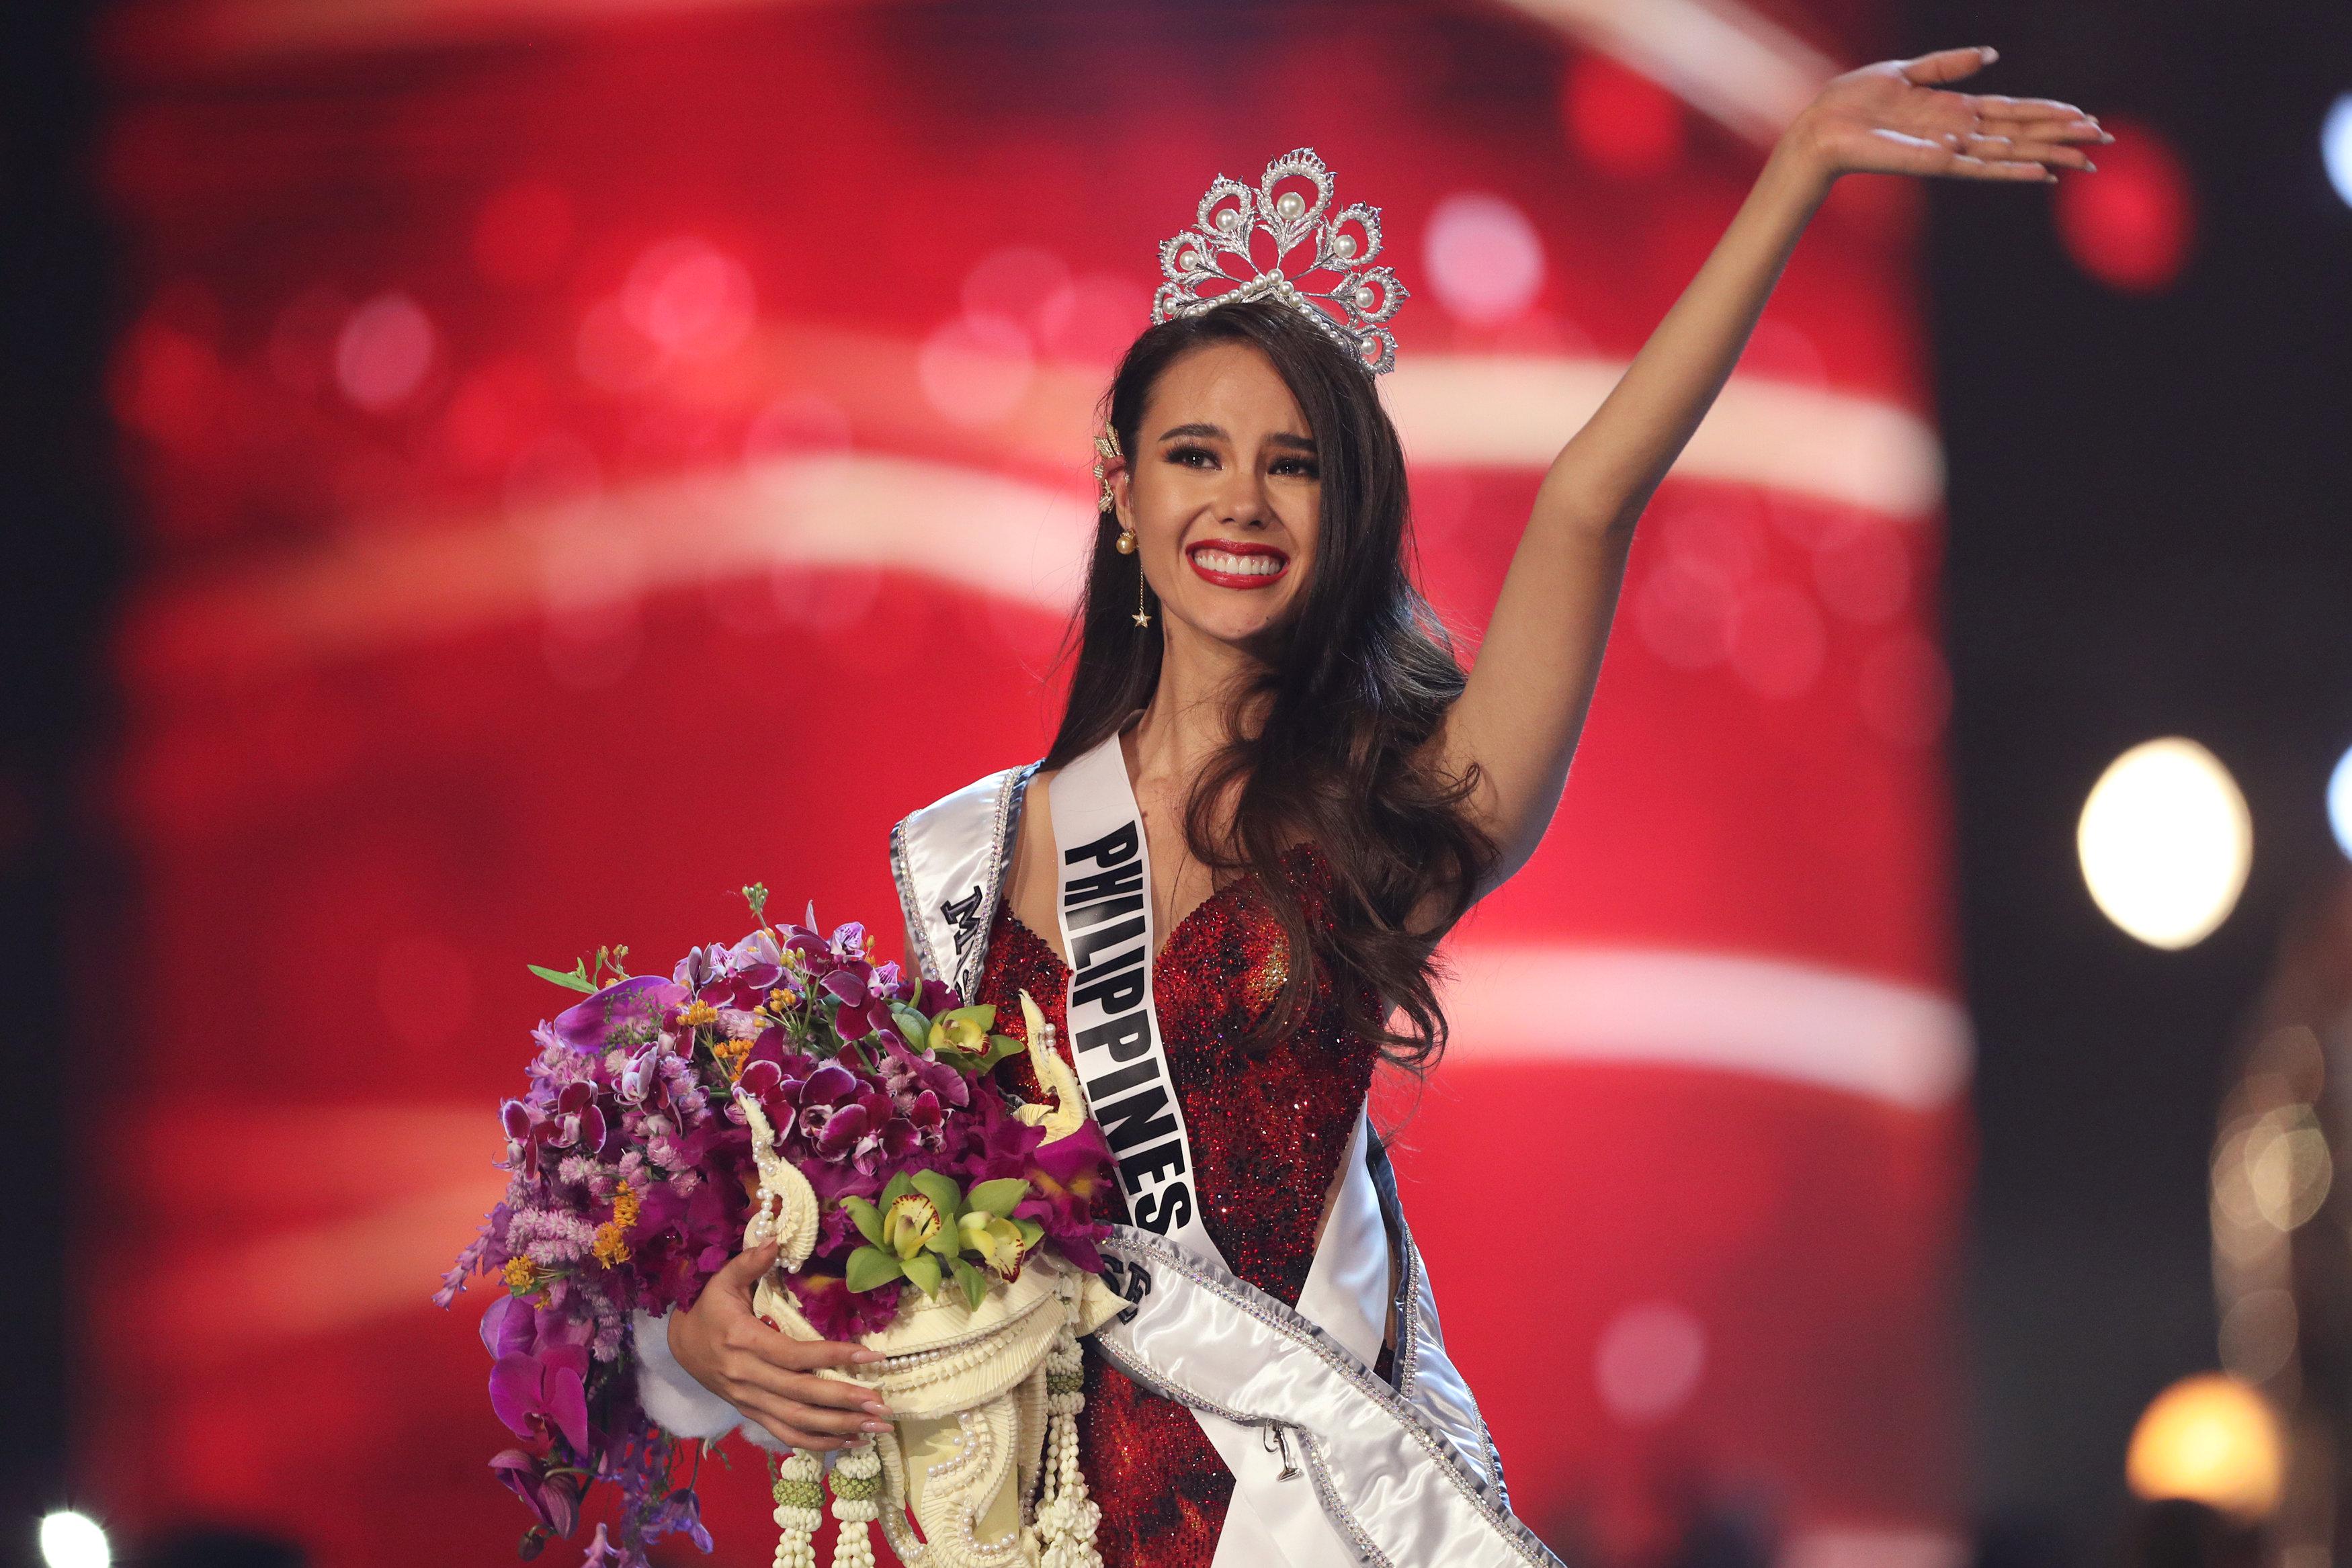 Miss. Катриона грей Мисс Вселенная 2018. Мисс Вселенная Филиппины 2018 Катриона грей. Катрина грей Мисс Вселенная. Катриона грей Мисс Вселенная 2019.